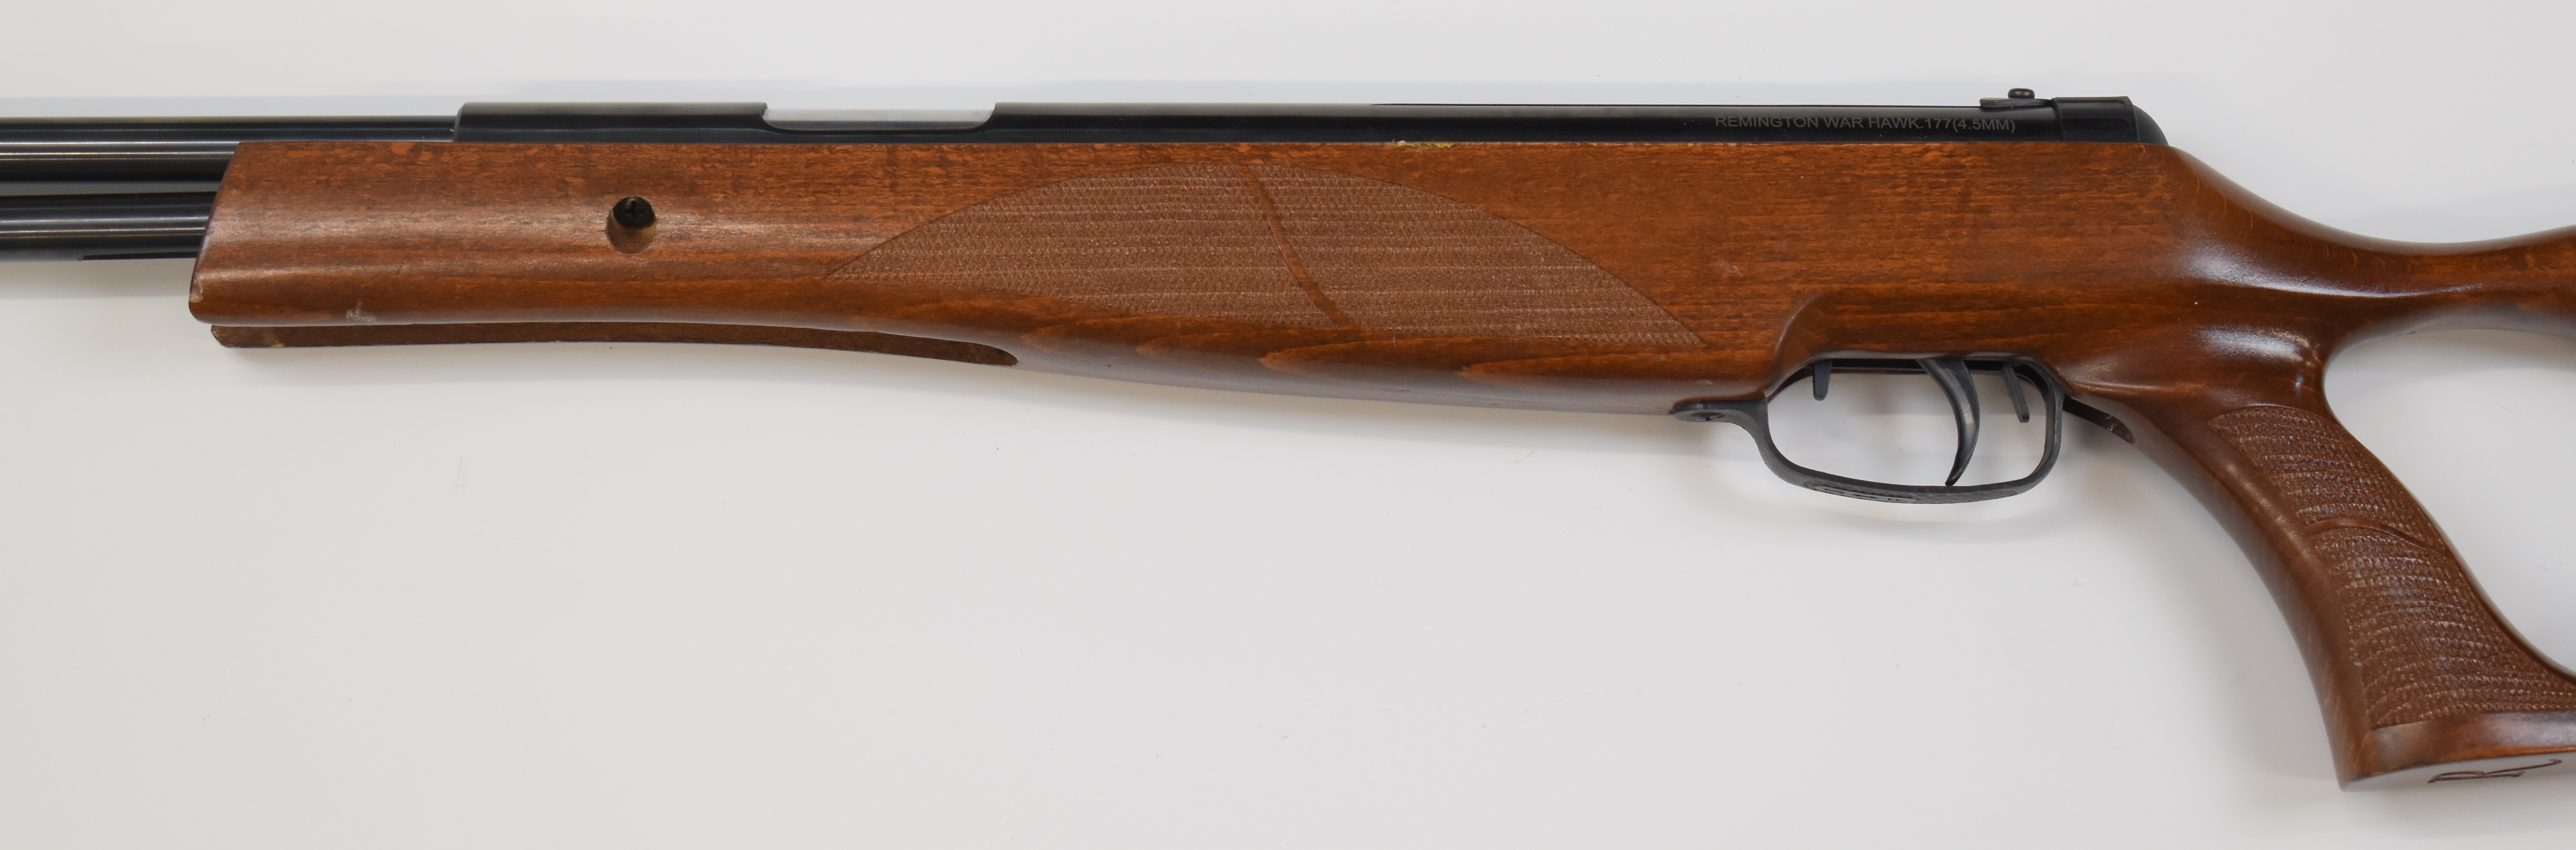 Remington Warhawk .177 under-lever air rifle with textured semi-pistol grip, raised cheek piece - Image 9 of 11